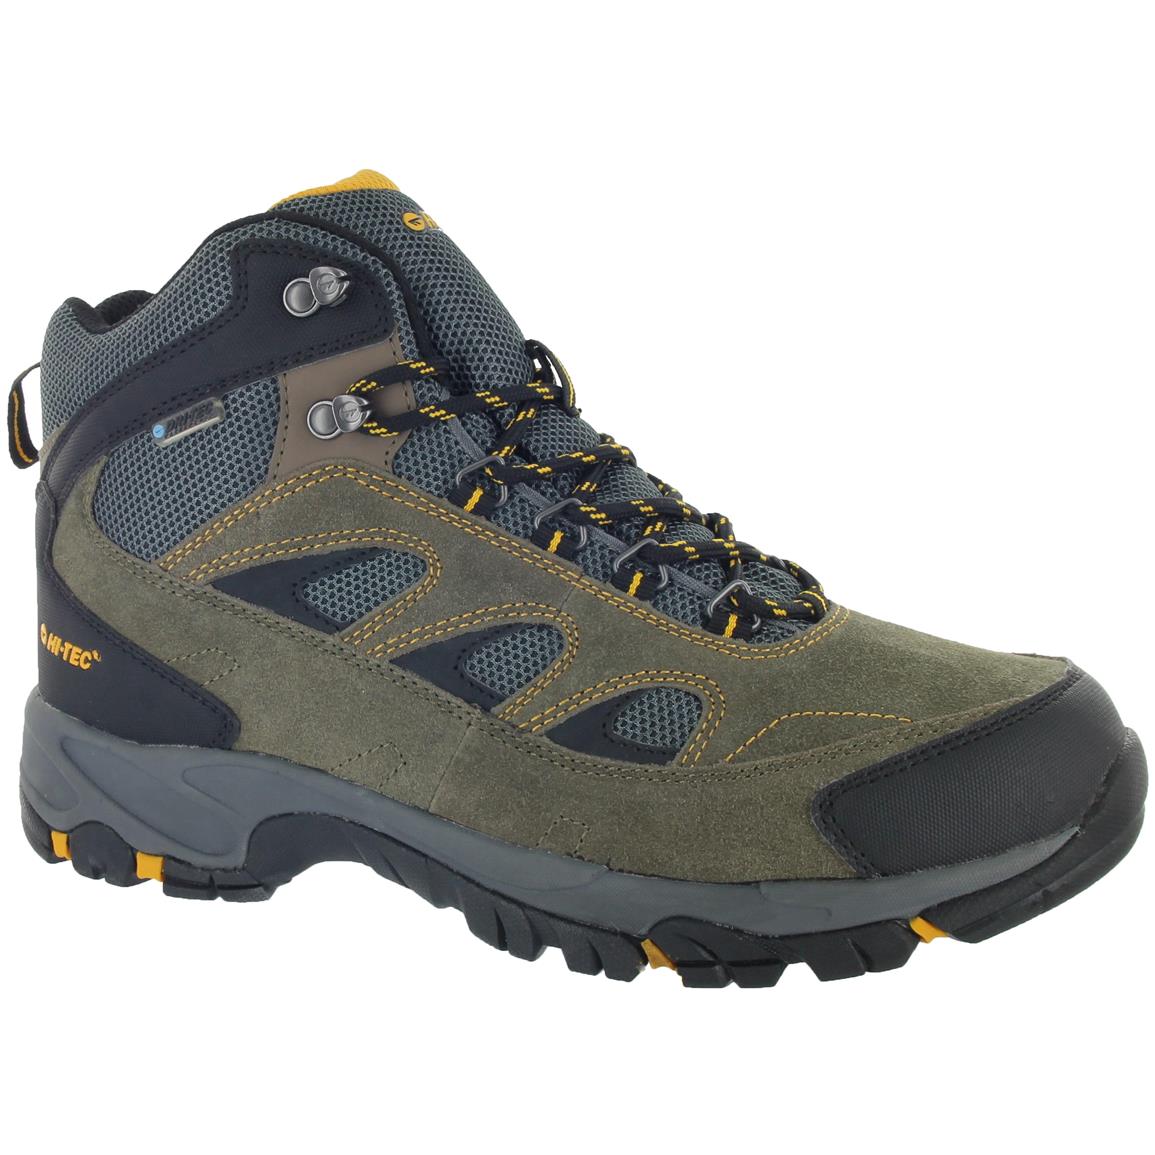 Hi-Tec Logan Men's Hiking Boots, Waterproof - 665194, Hiking Boots